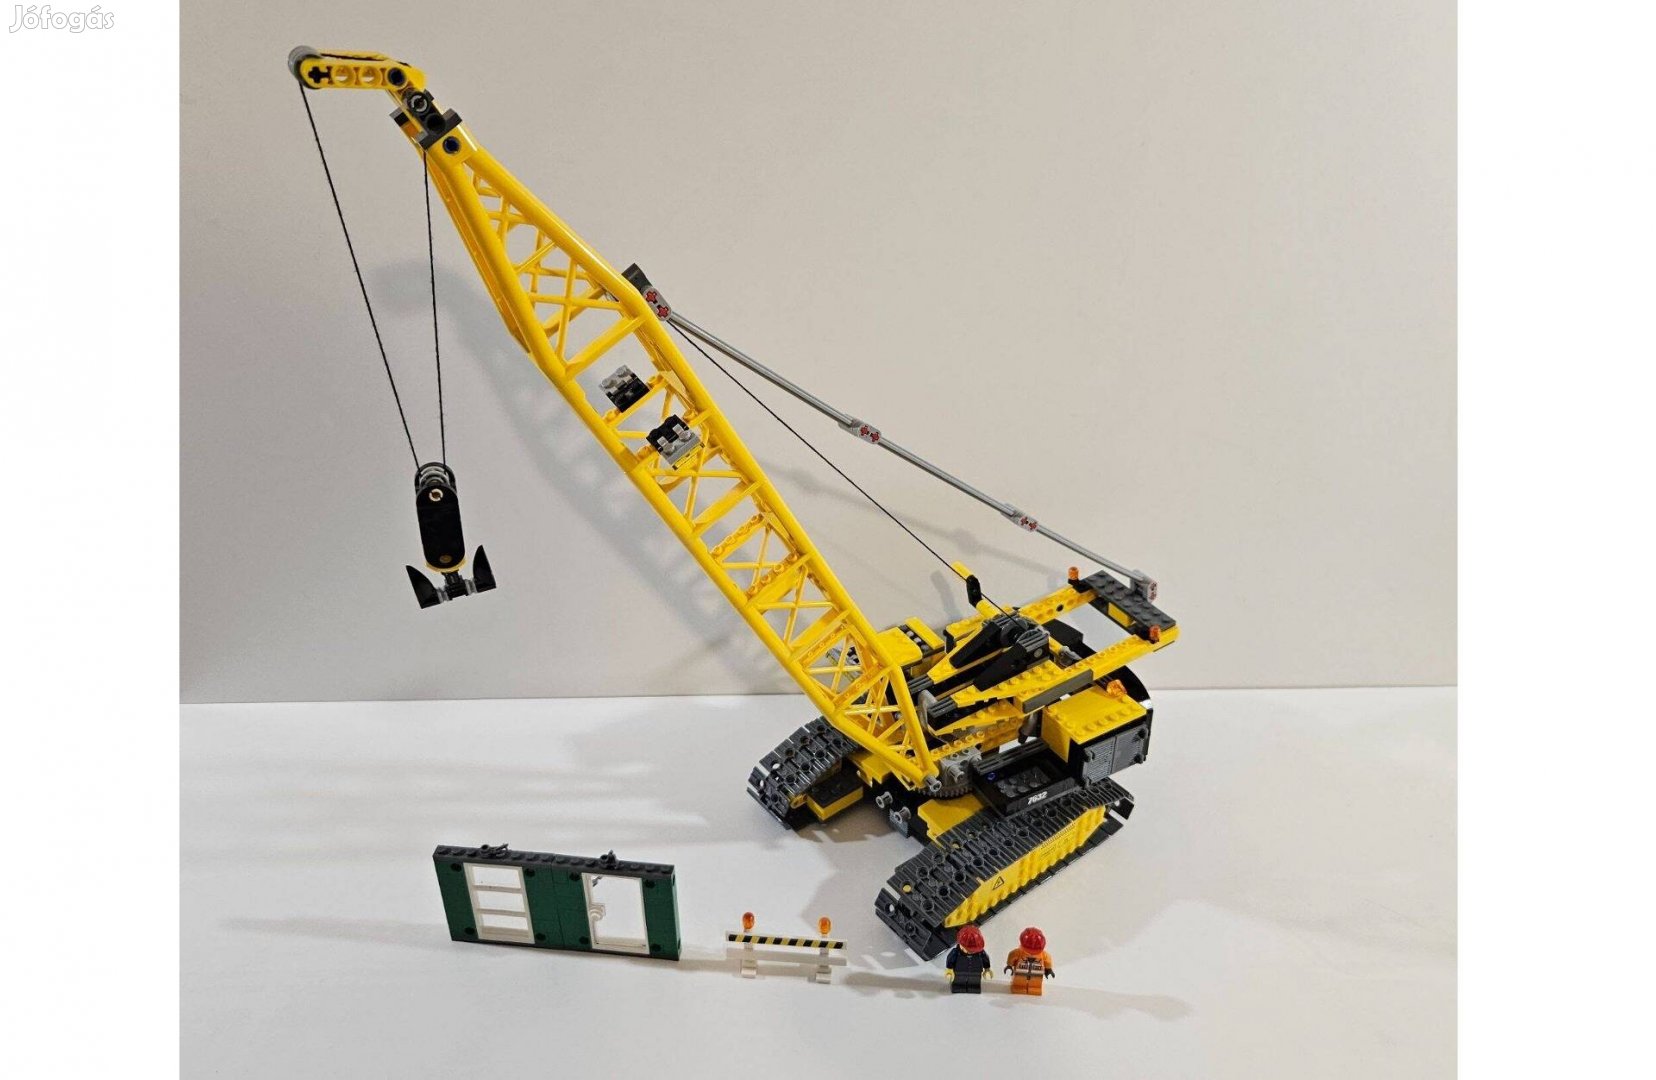 LEGO City Construction - 7632 - Crawler Crane